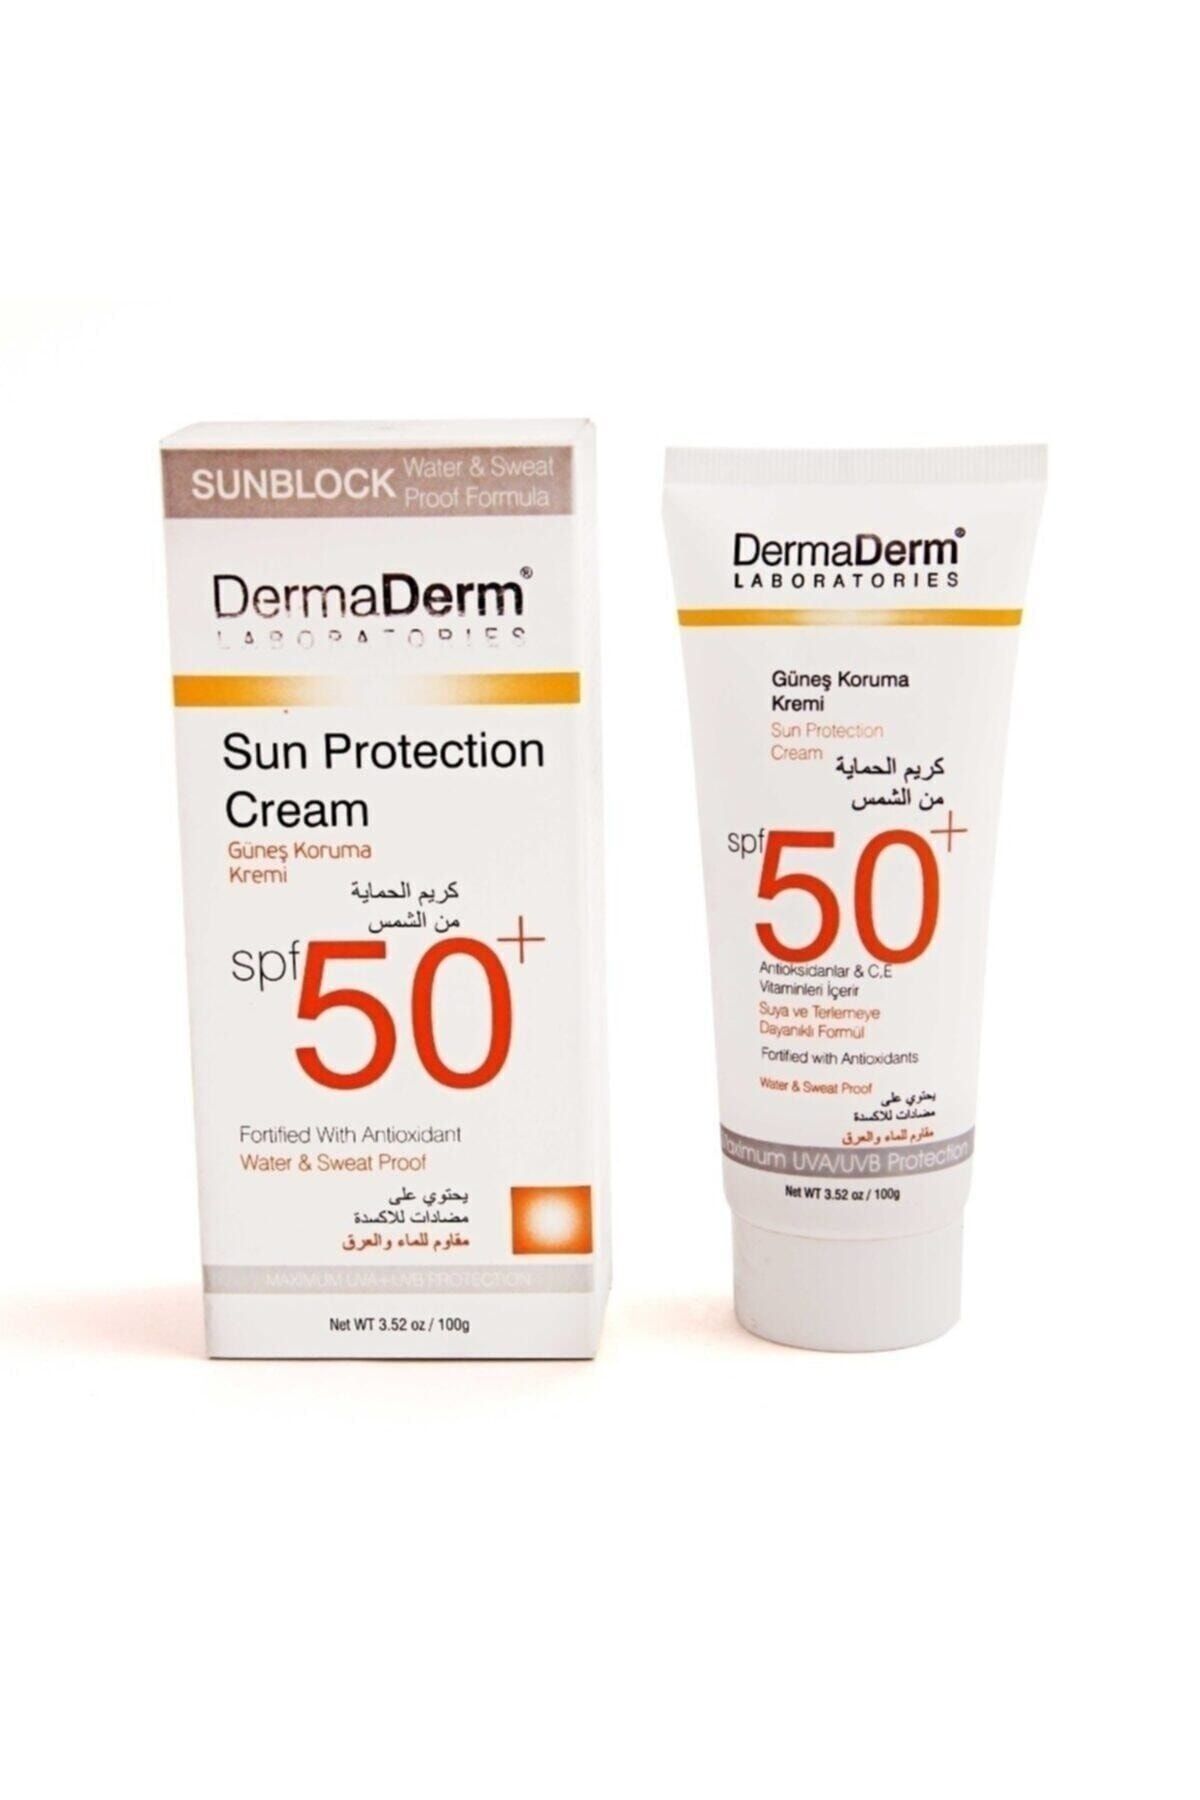 DermaDerm Spf 50+ Faktör Güneş Kremi Dermatolojik Seri Ürt 05/18